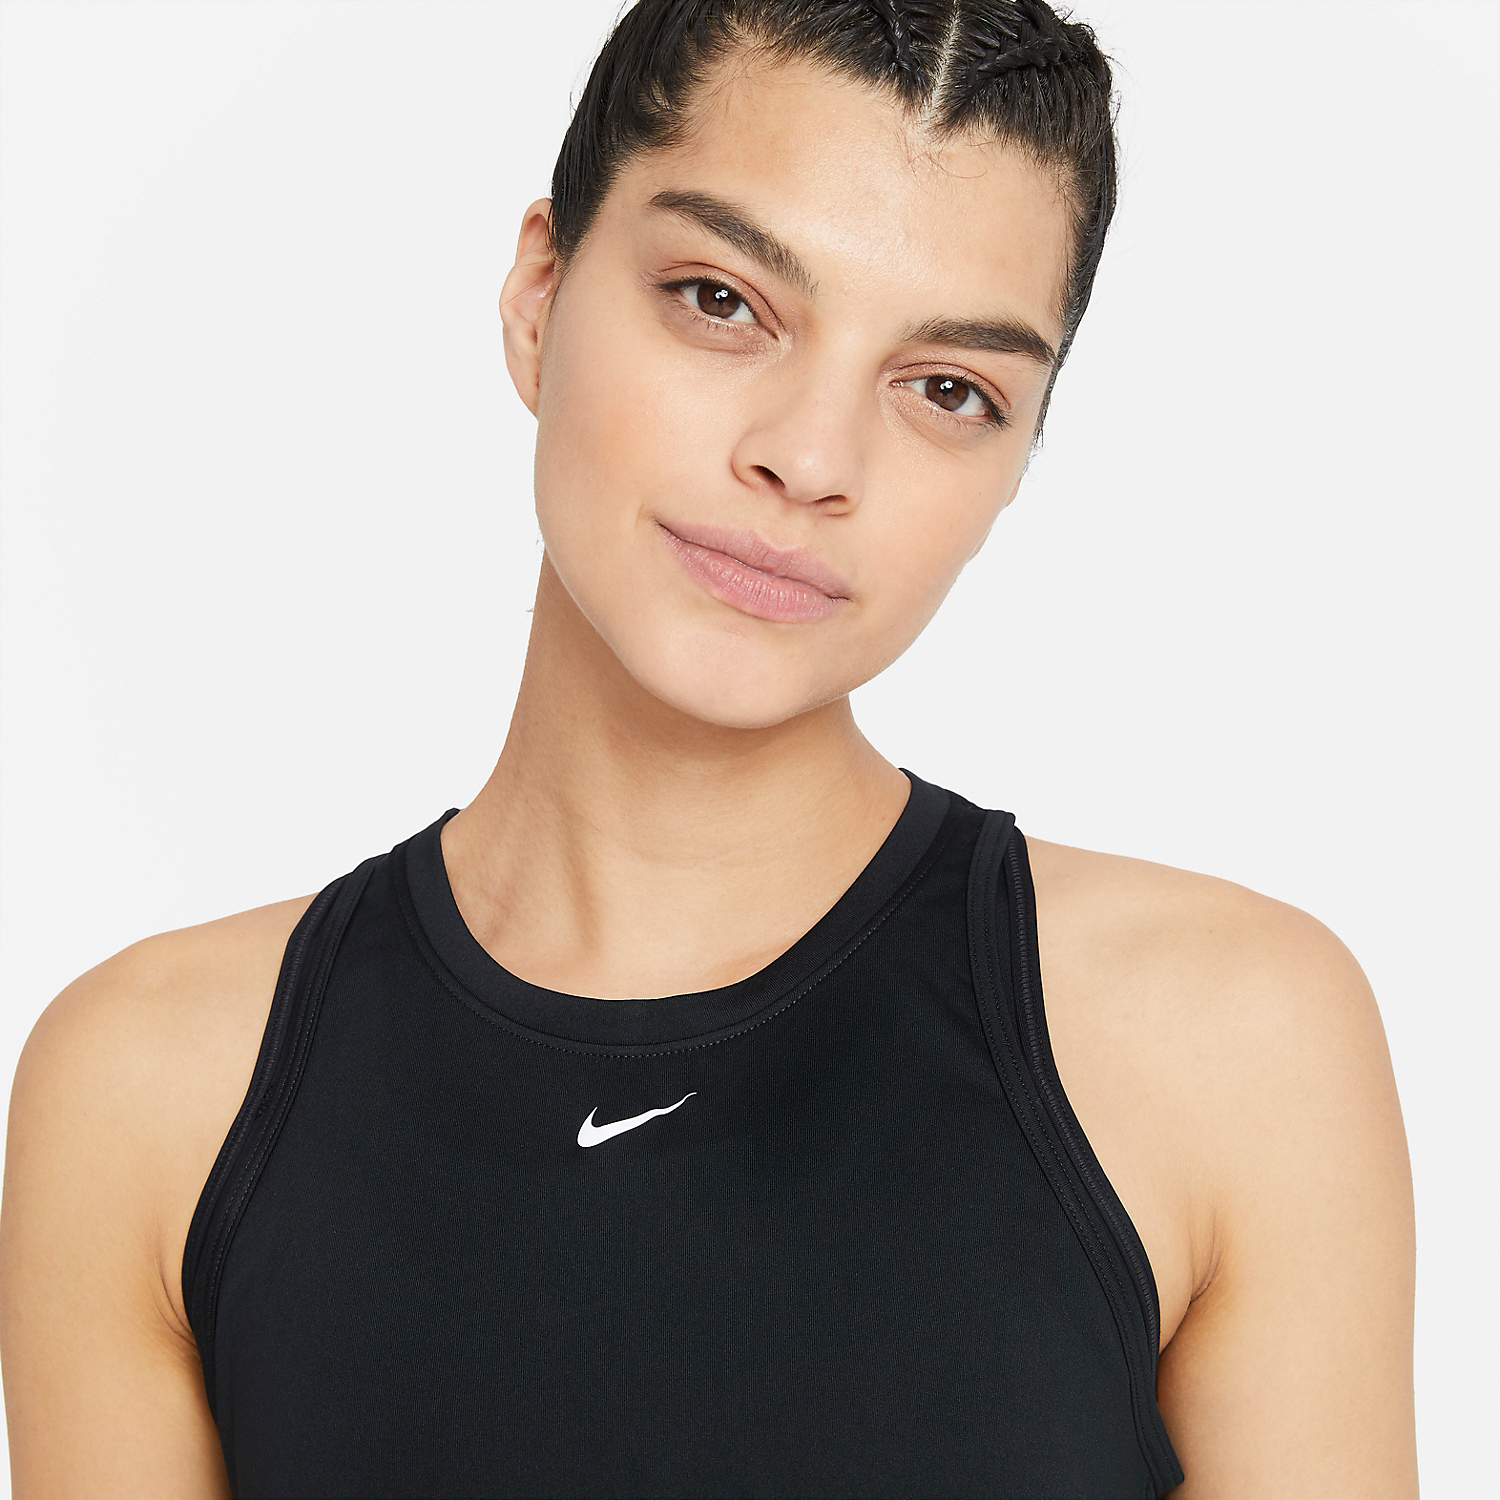 Nike One Women's Tennis Tank - Black/White